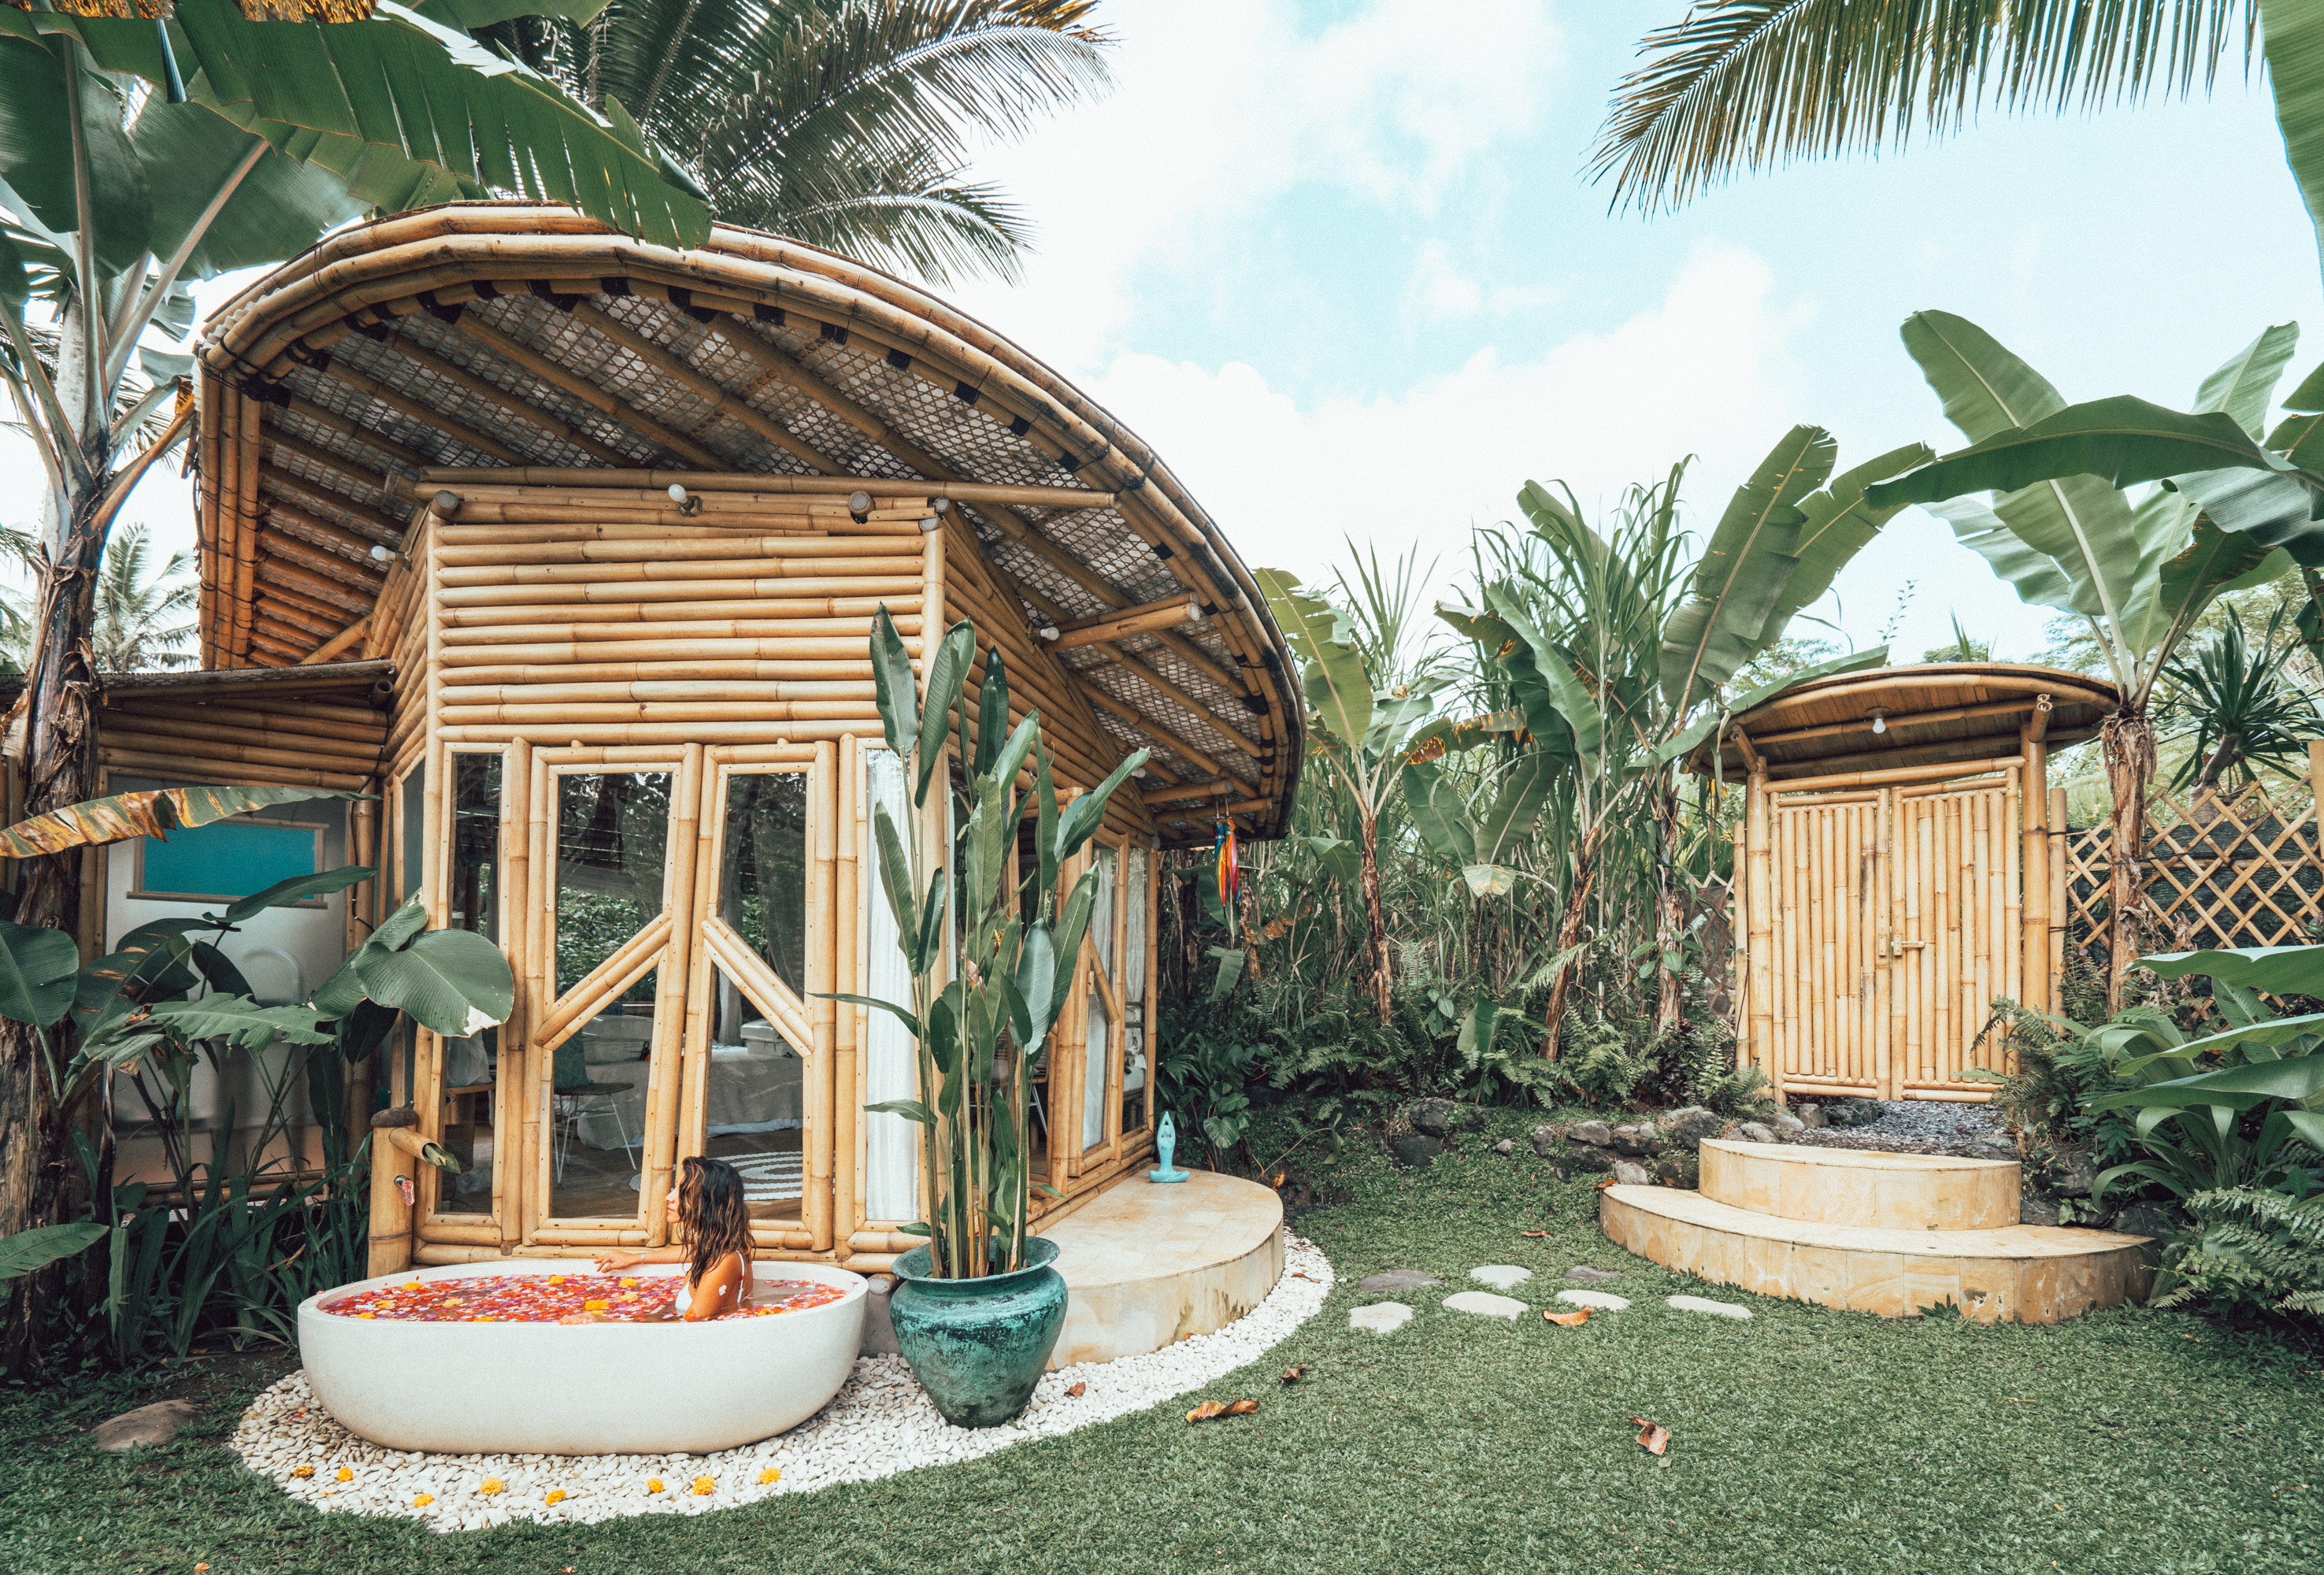 Hideout Bali | Eco Bamboo Home | Cabins in Bali | Wowow Home Magazine